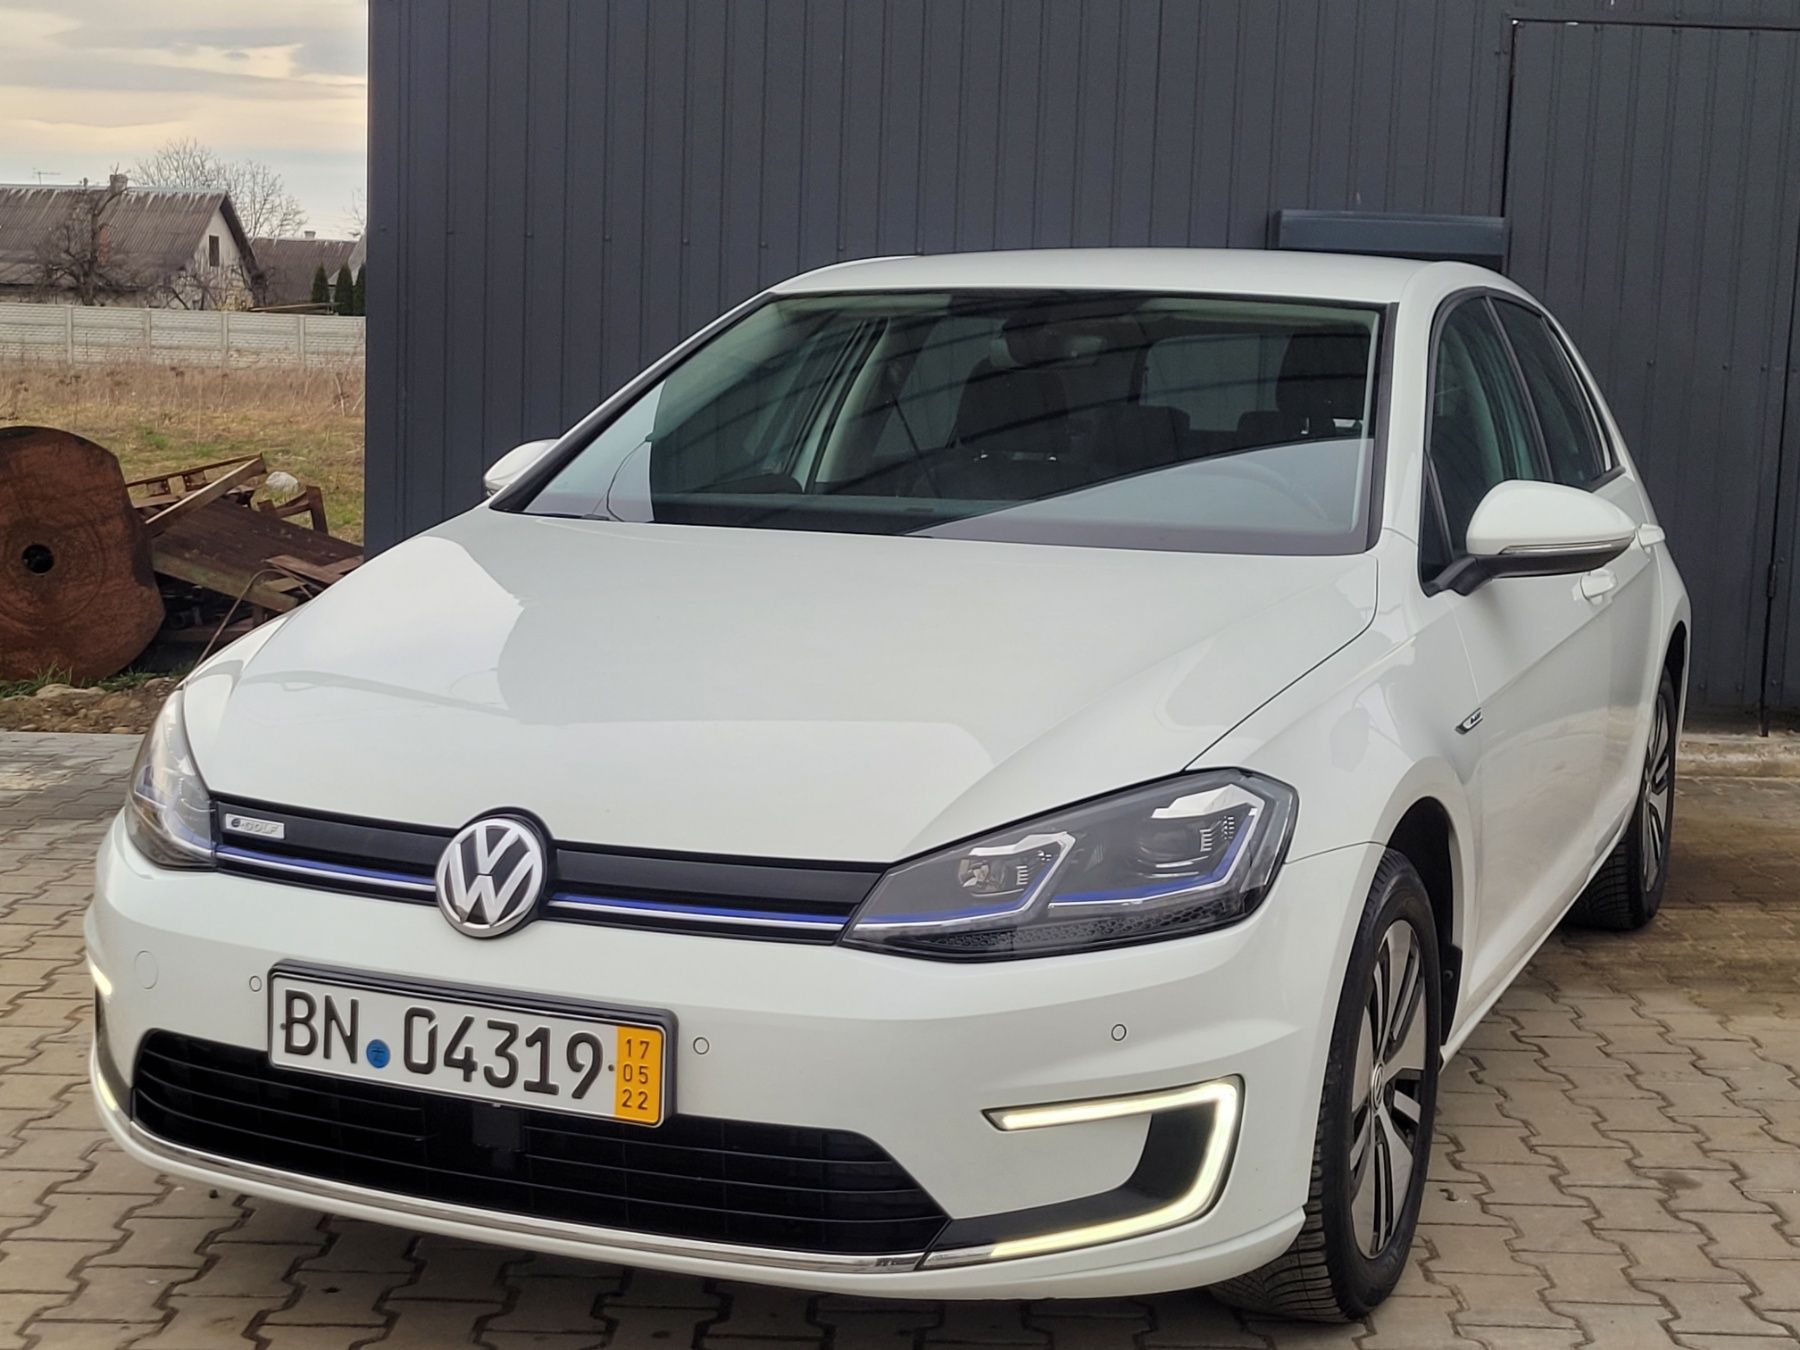 Volkswagen e-golf